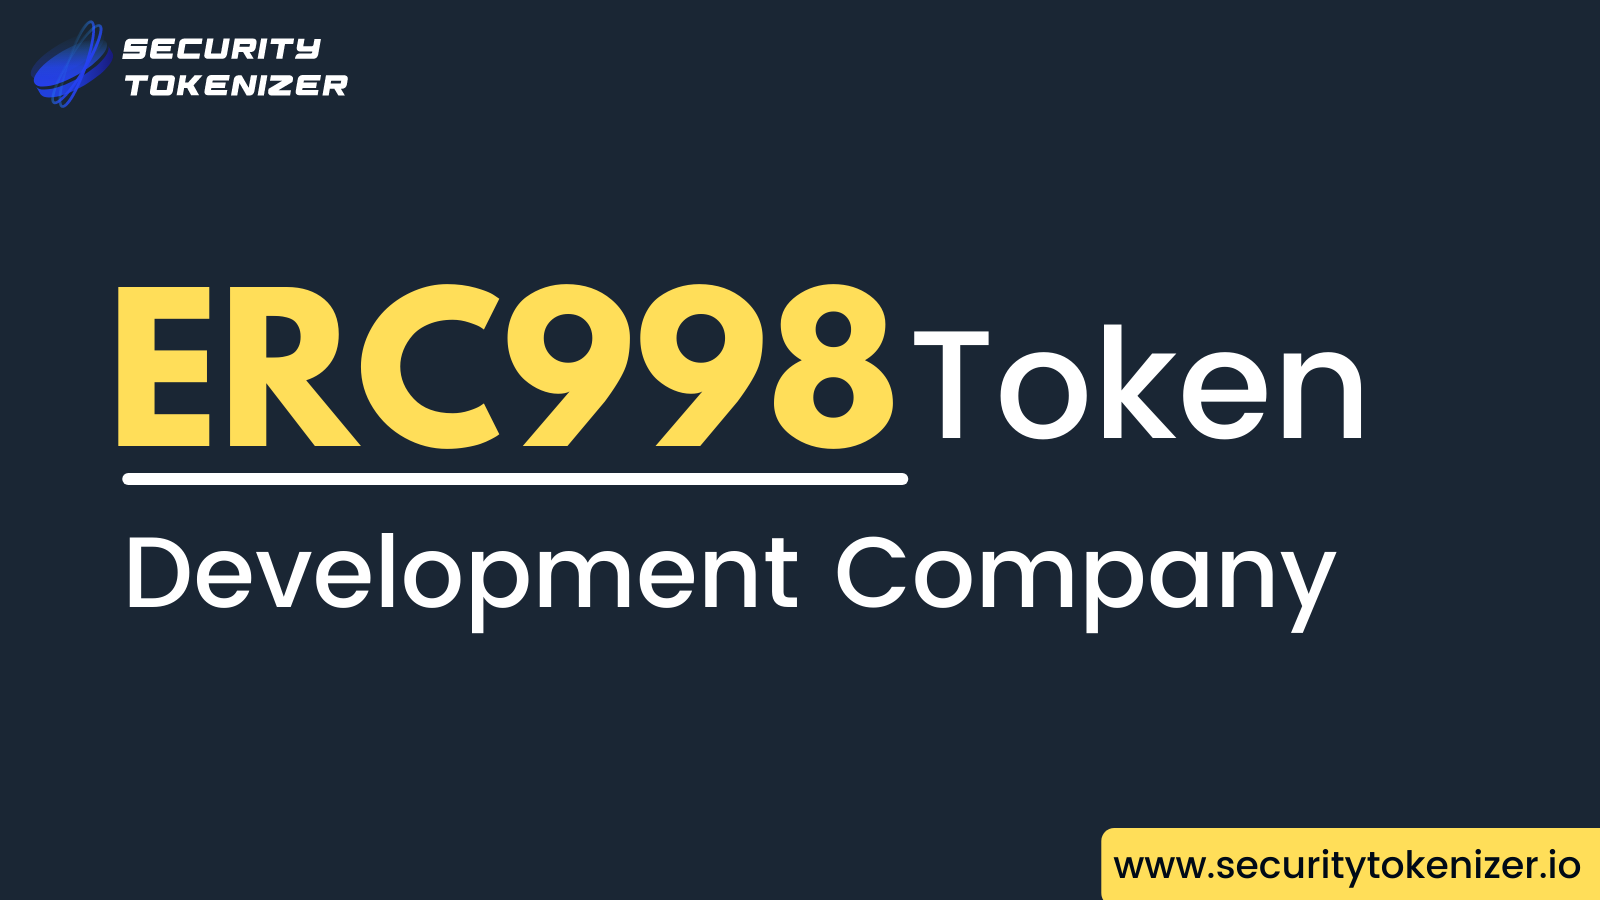 ERC998 Token Development Company